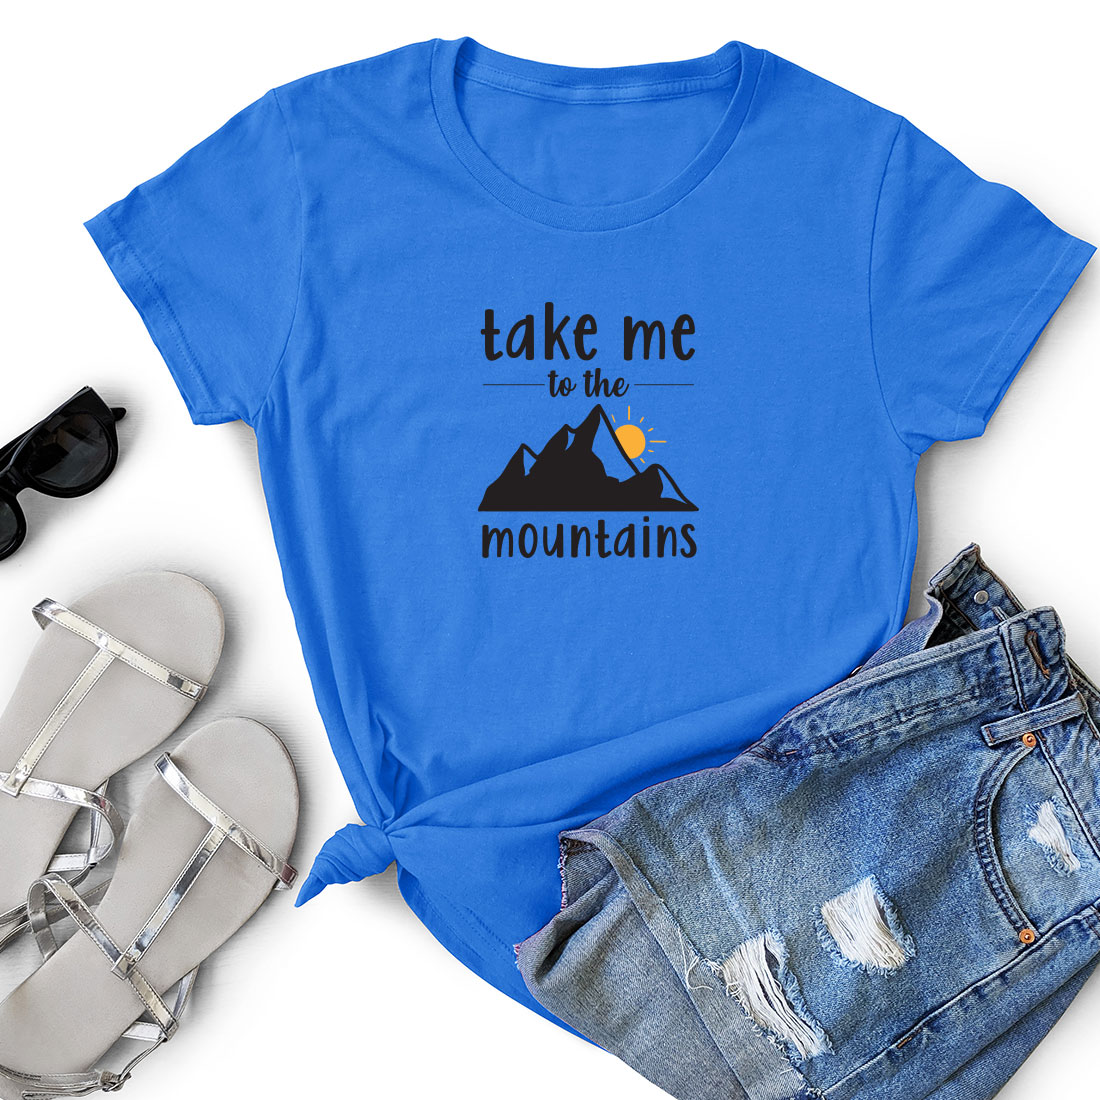 T - shirt that says take me to the mountains.